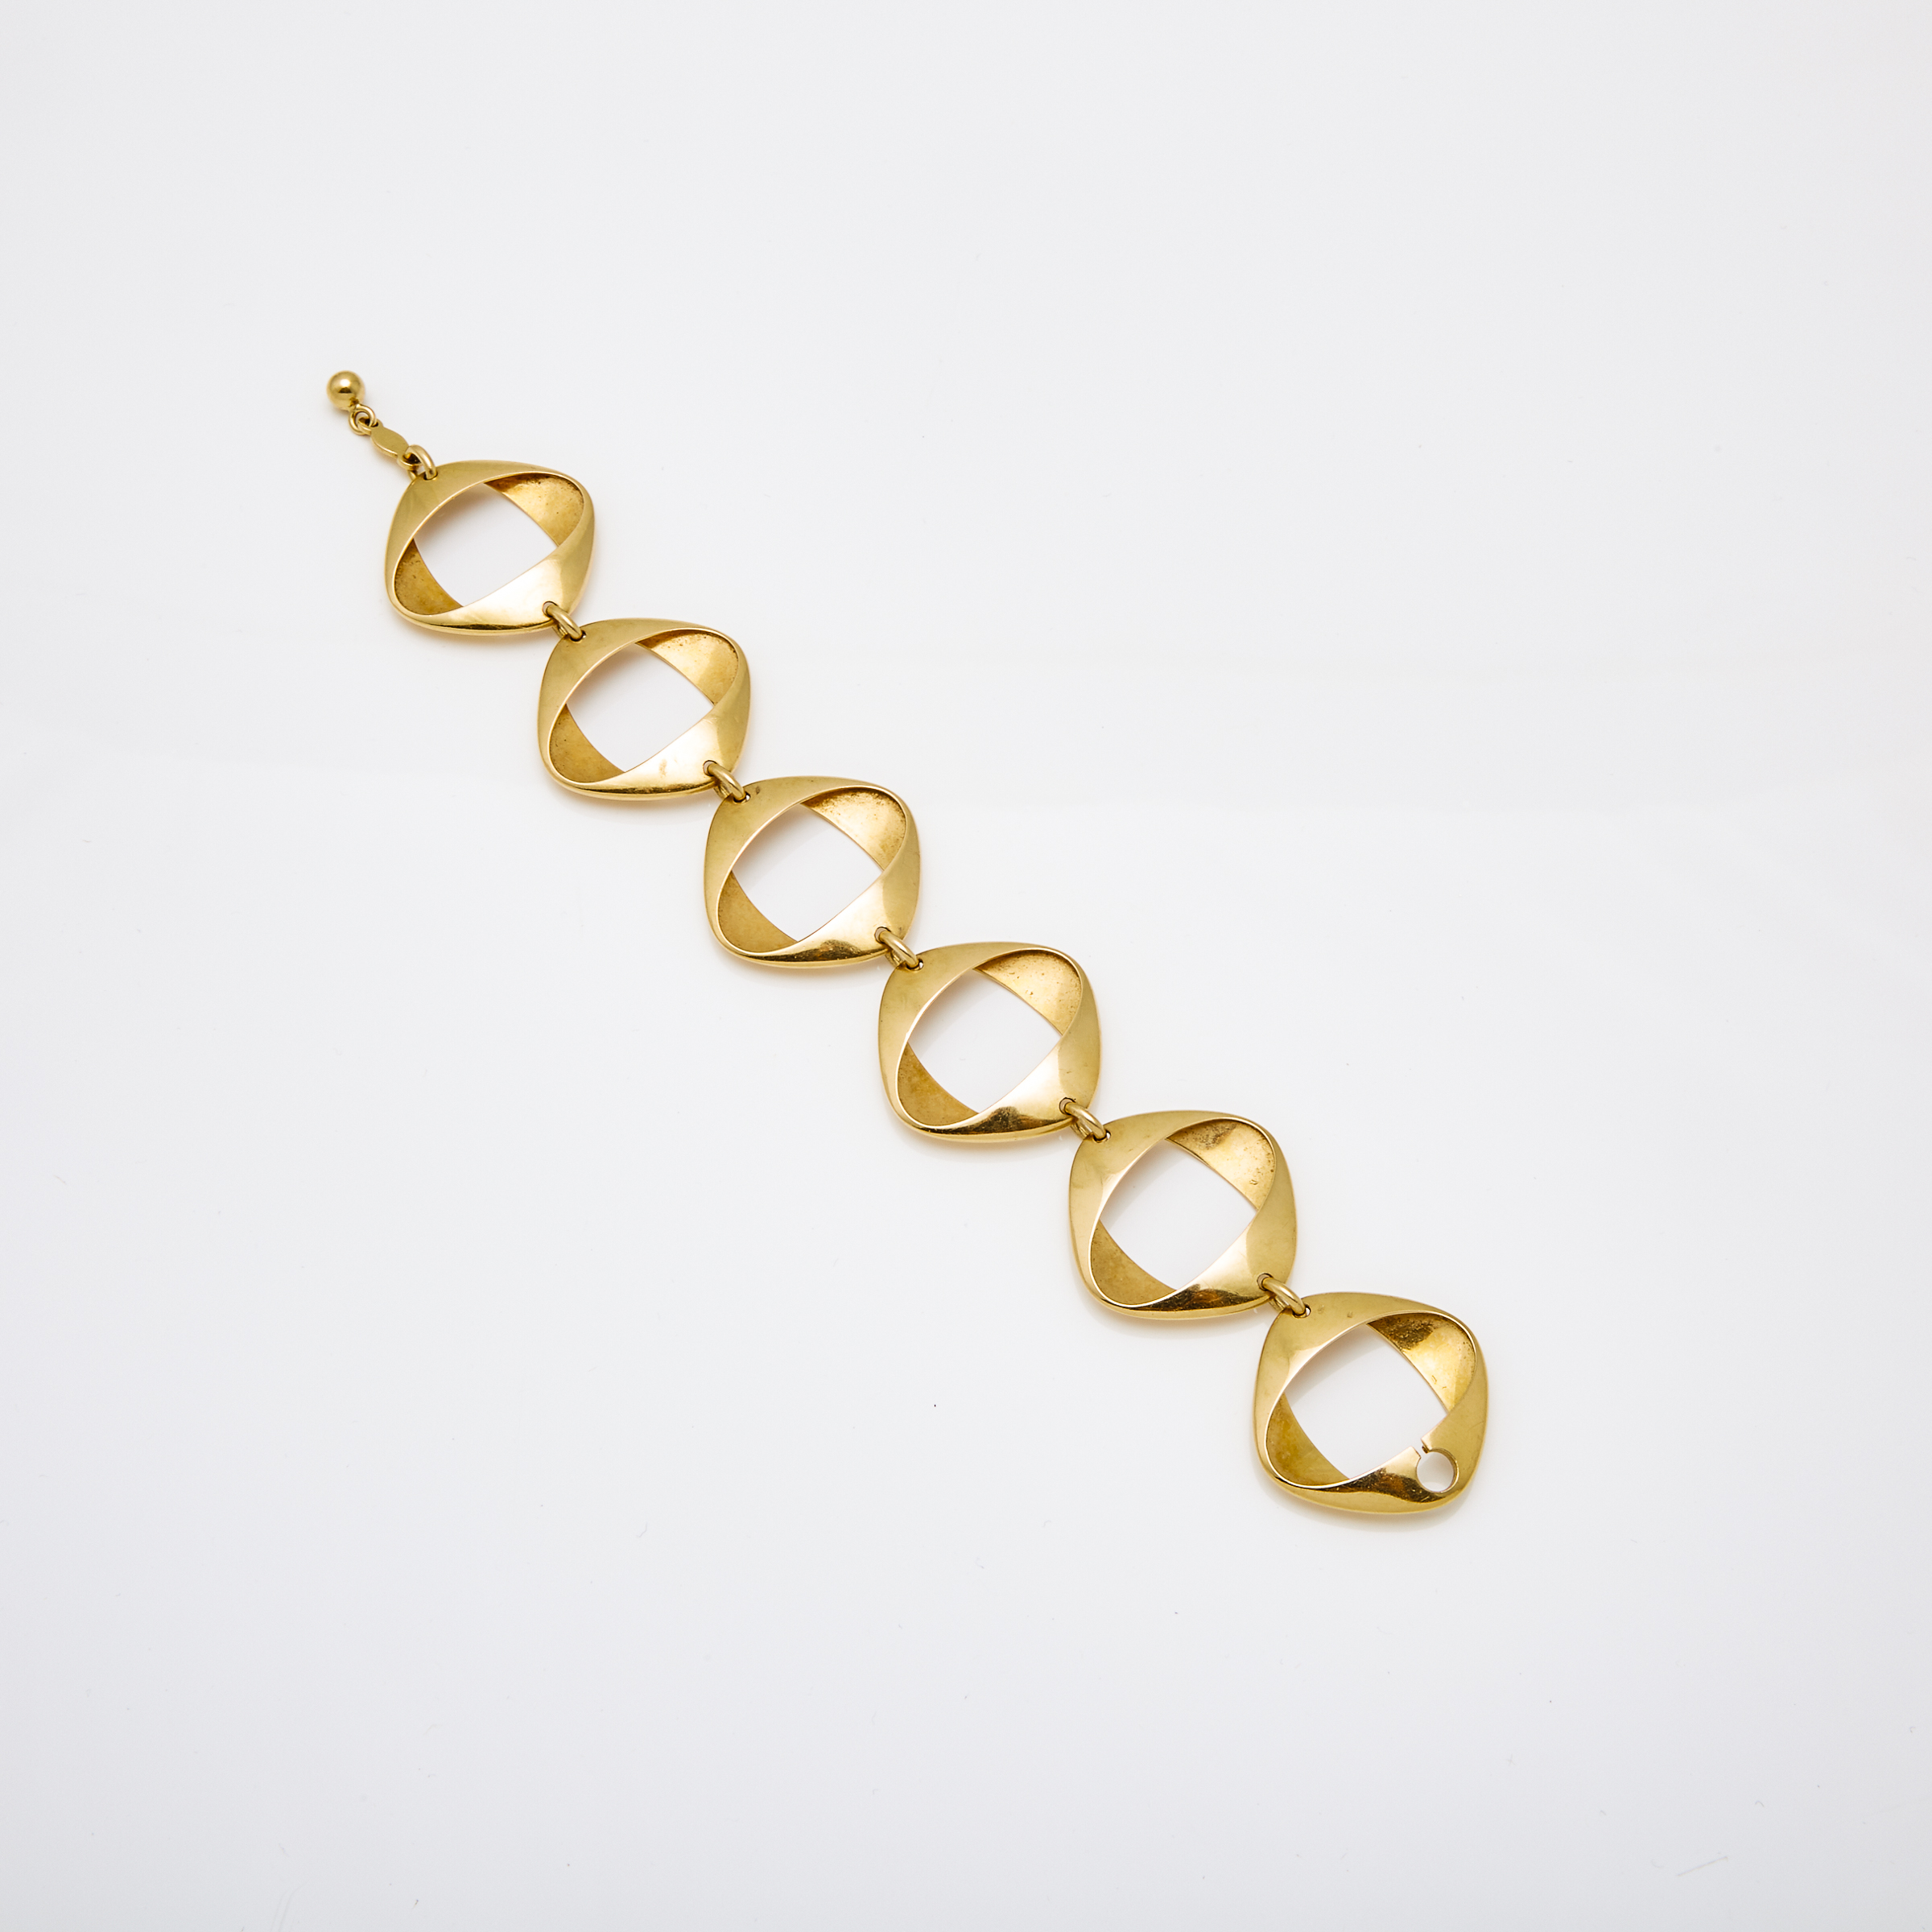 Georg Jensen Danish 18k Yellow Gold Link Bracelet